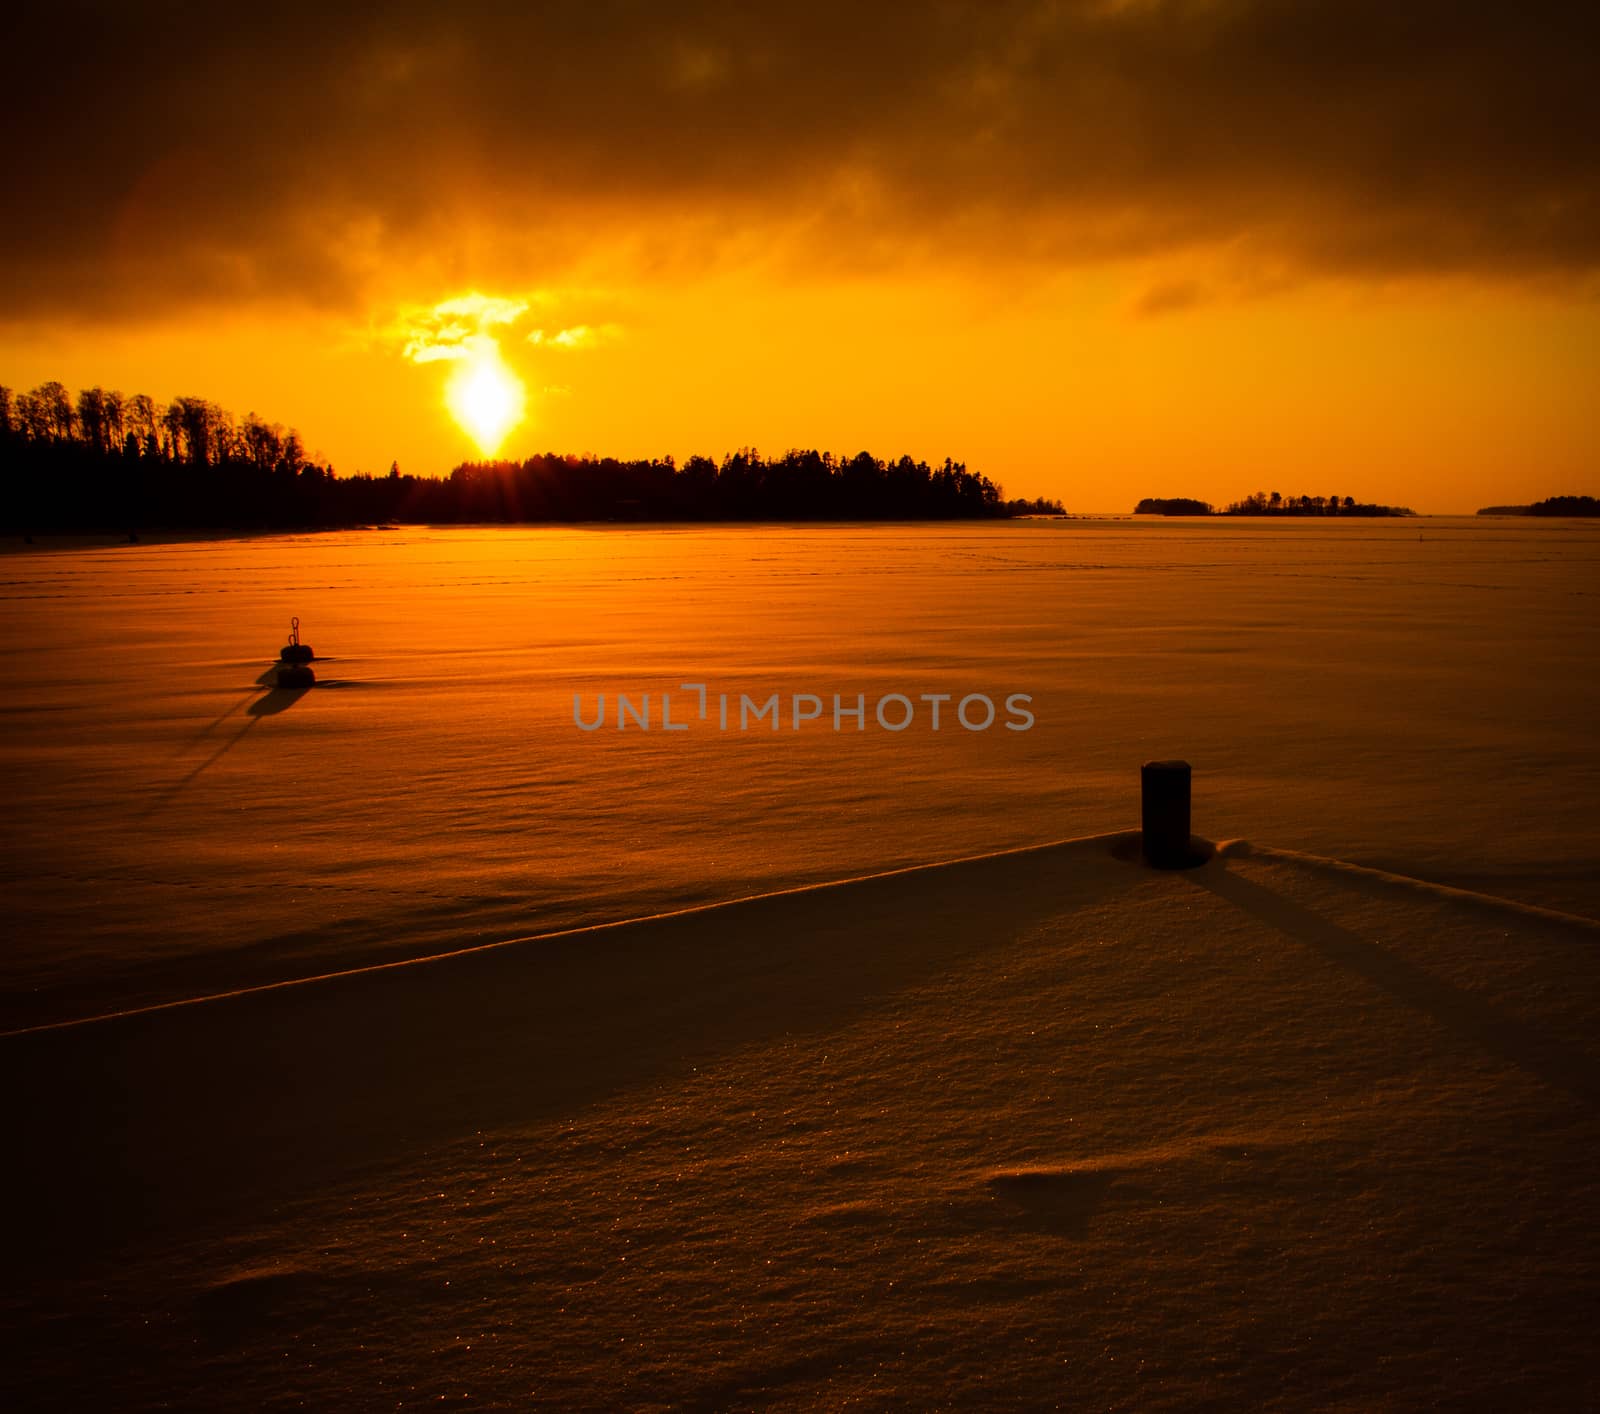 Sunset in Luvia, Finland by leorantala